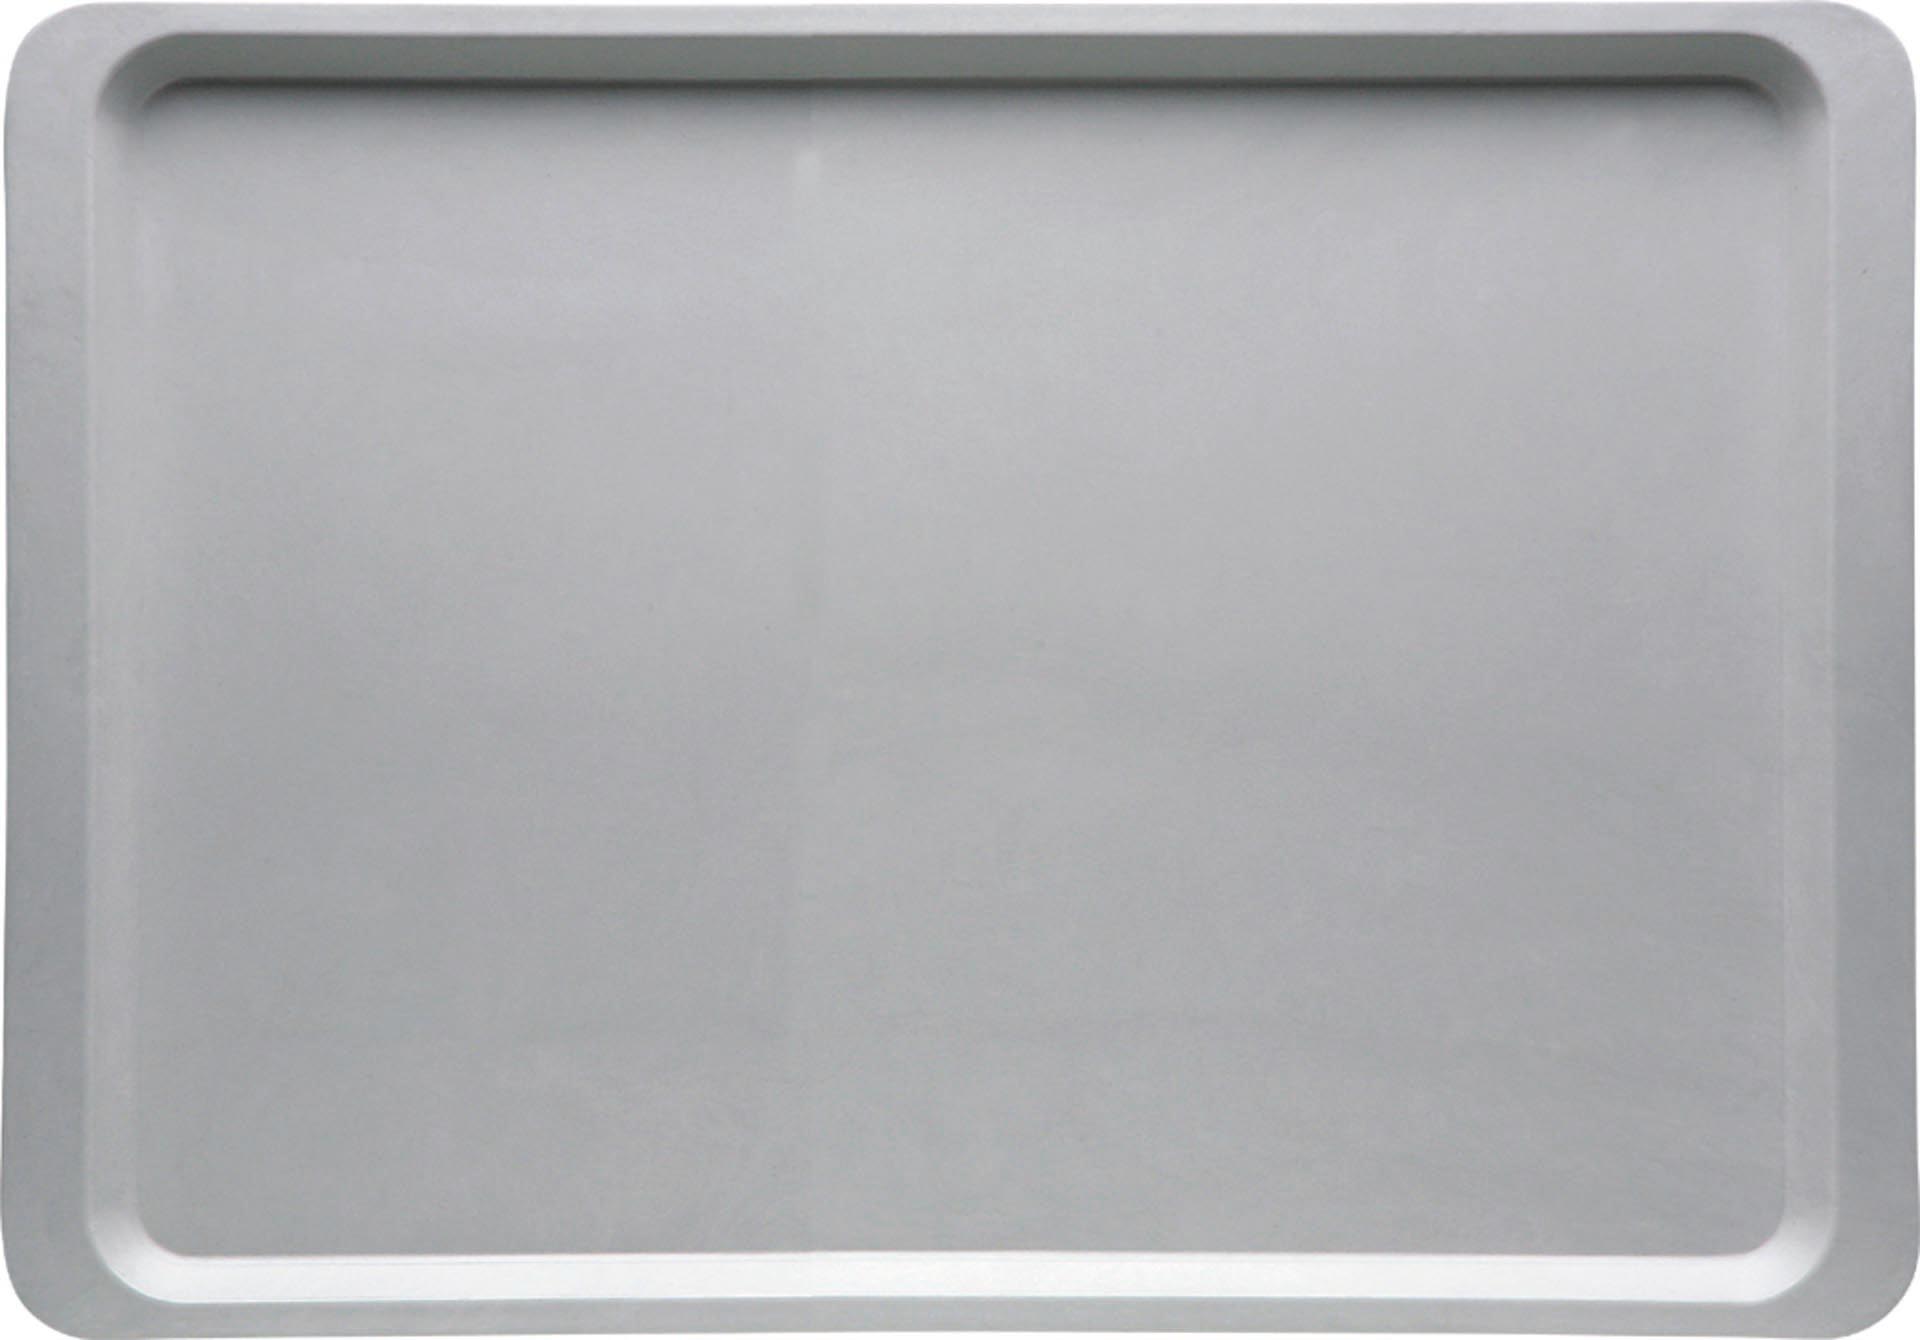 Euronorm-Tablett 53x37 cm, lichtgrau